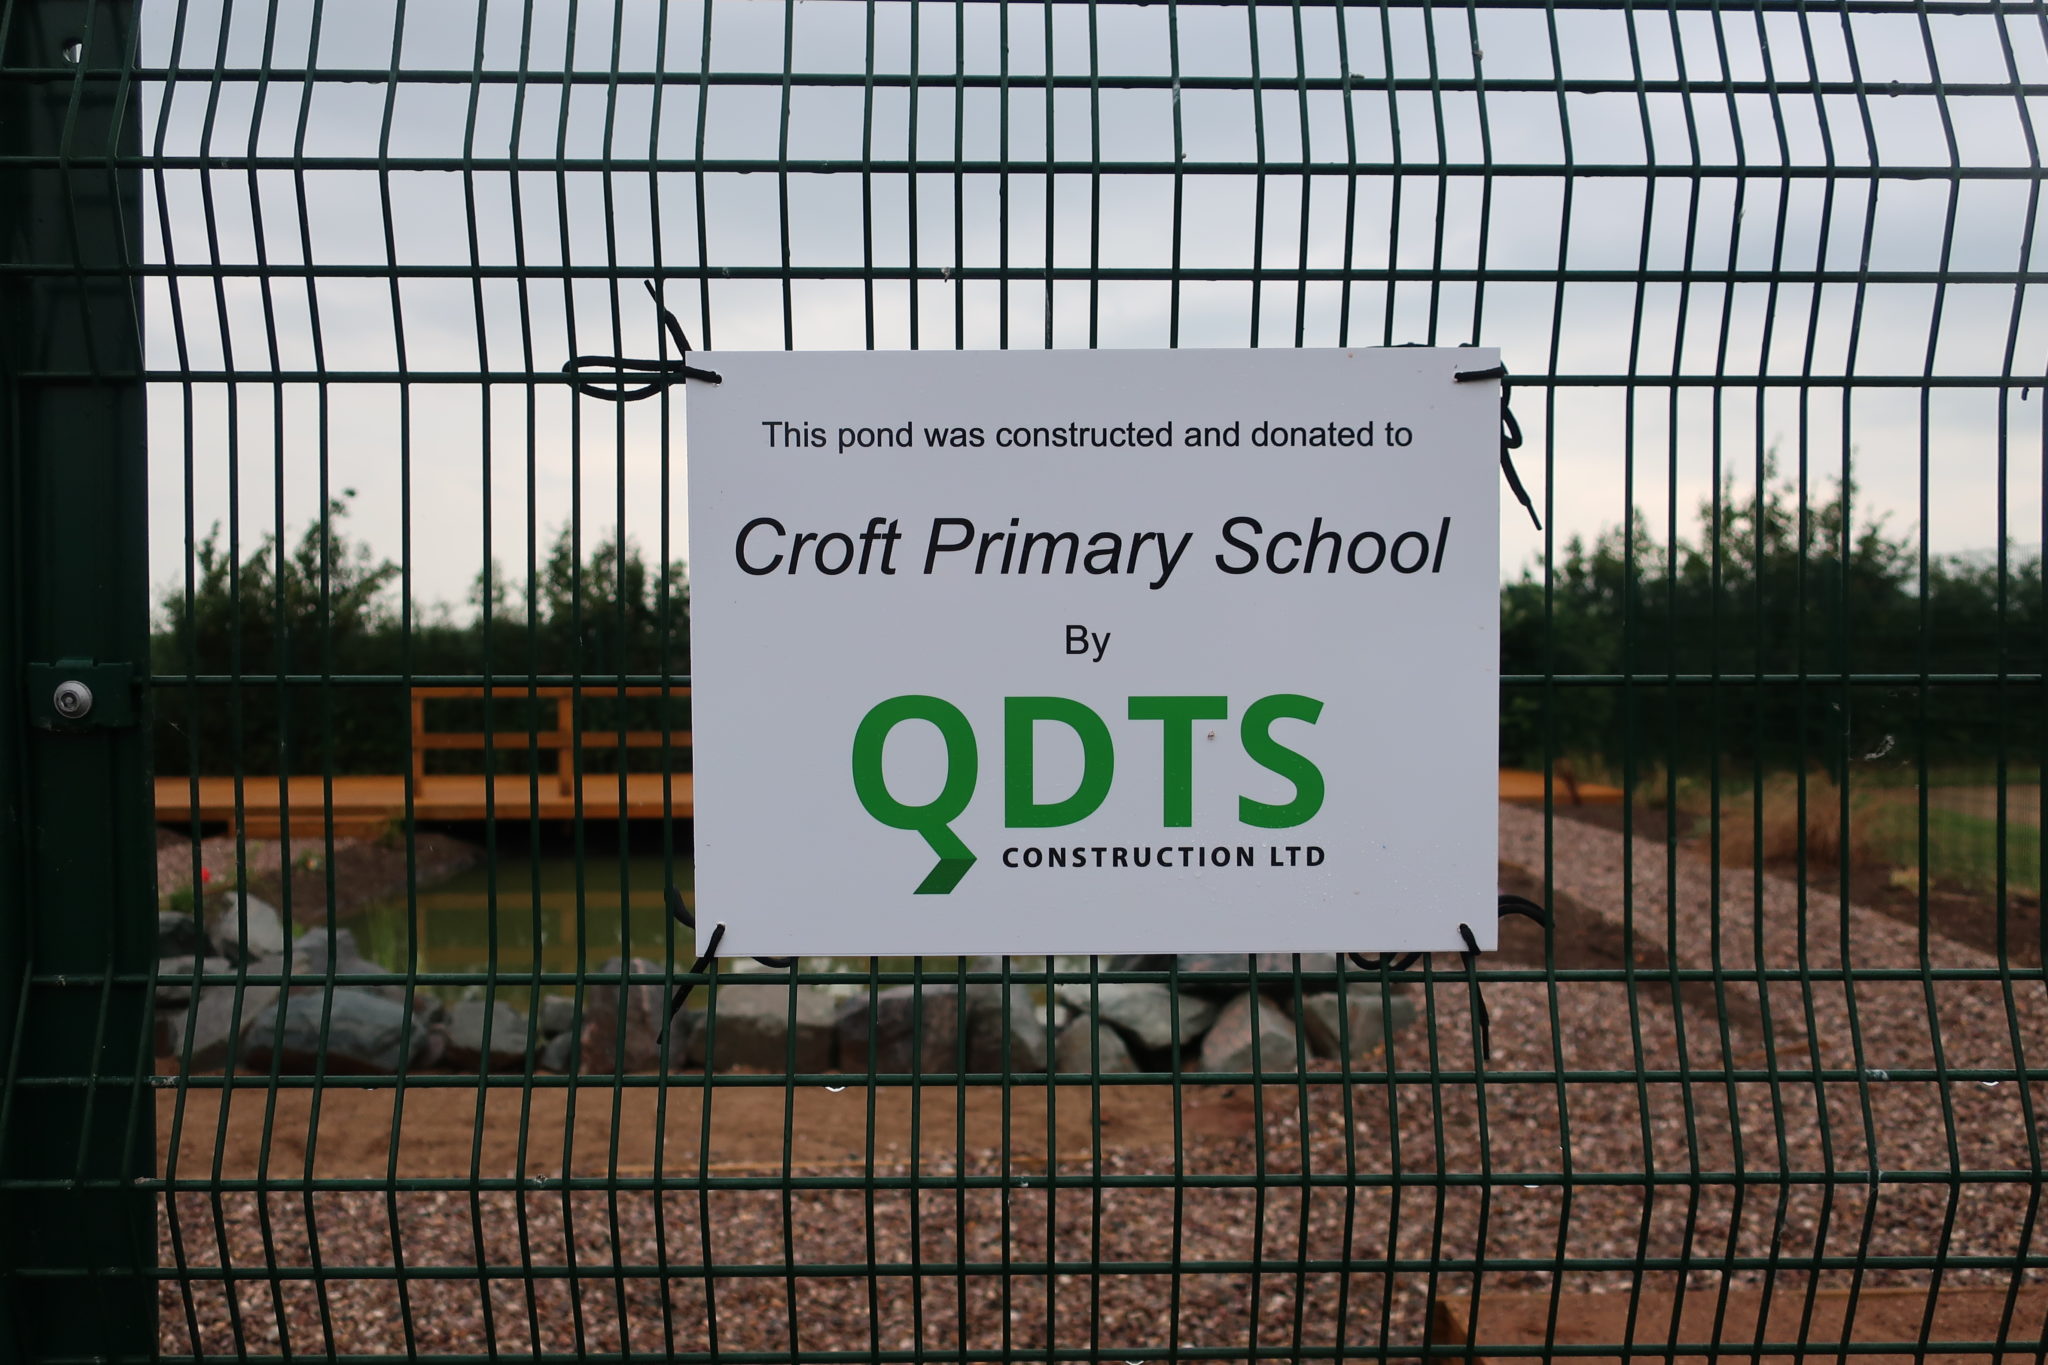 QDTS construction provide Croft Primary School with free nature area @QdtsLtd